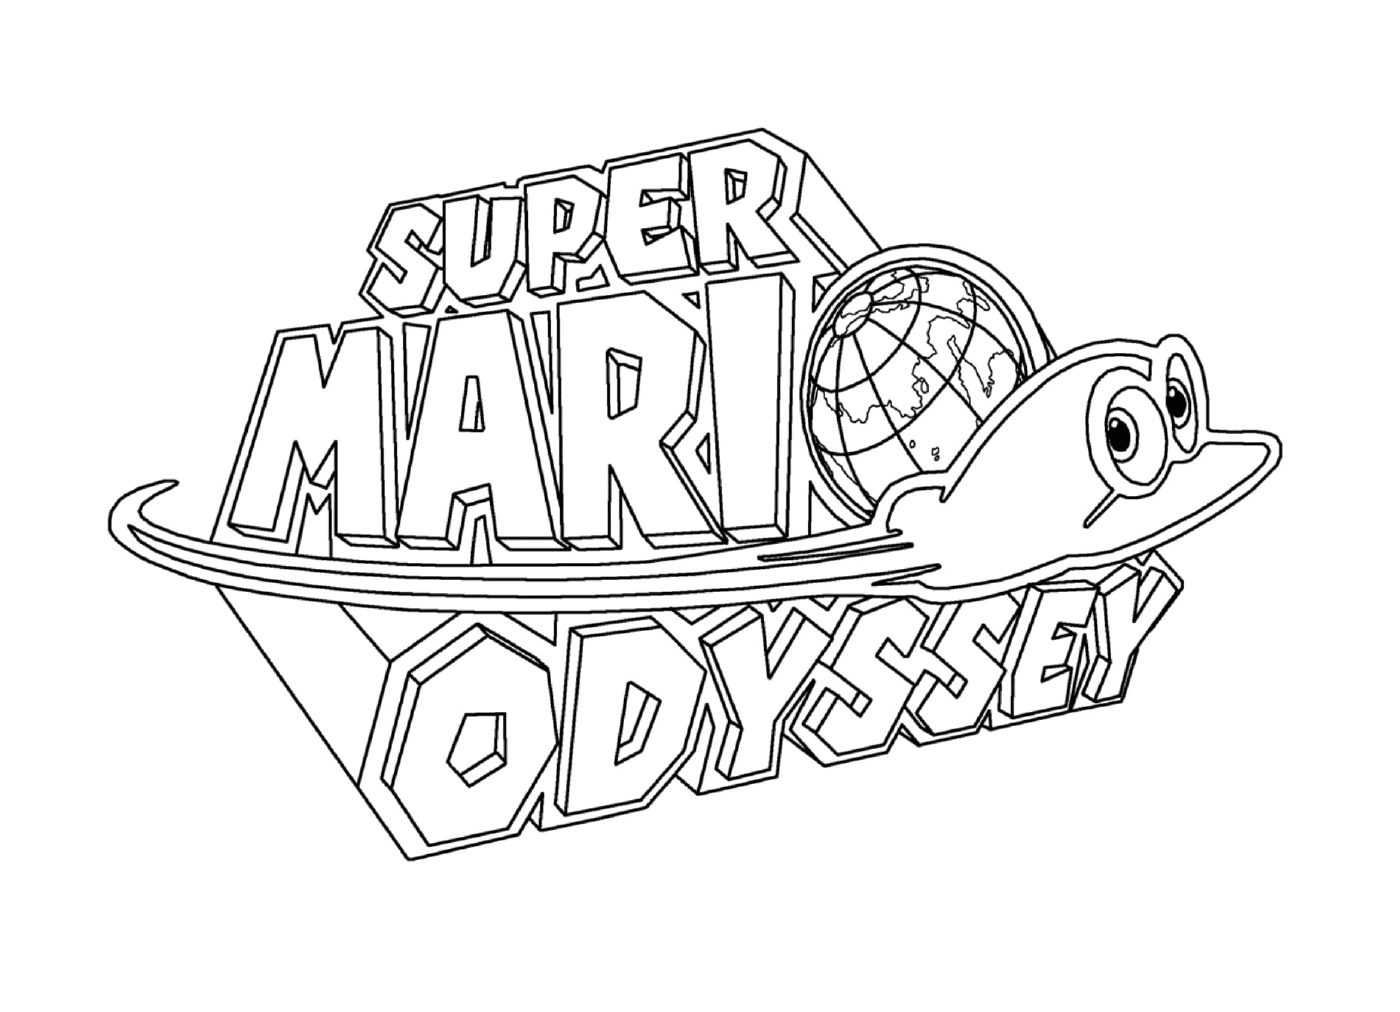  Logotipo Super Mario Odyssey da Nintendo 